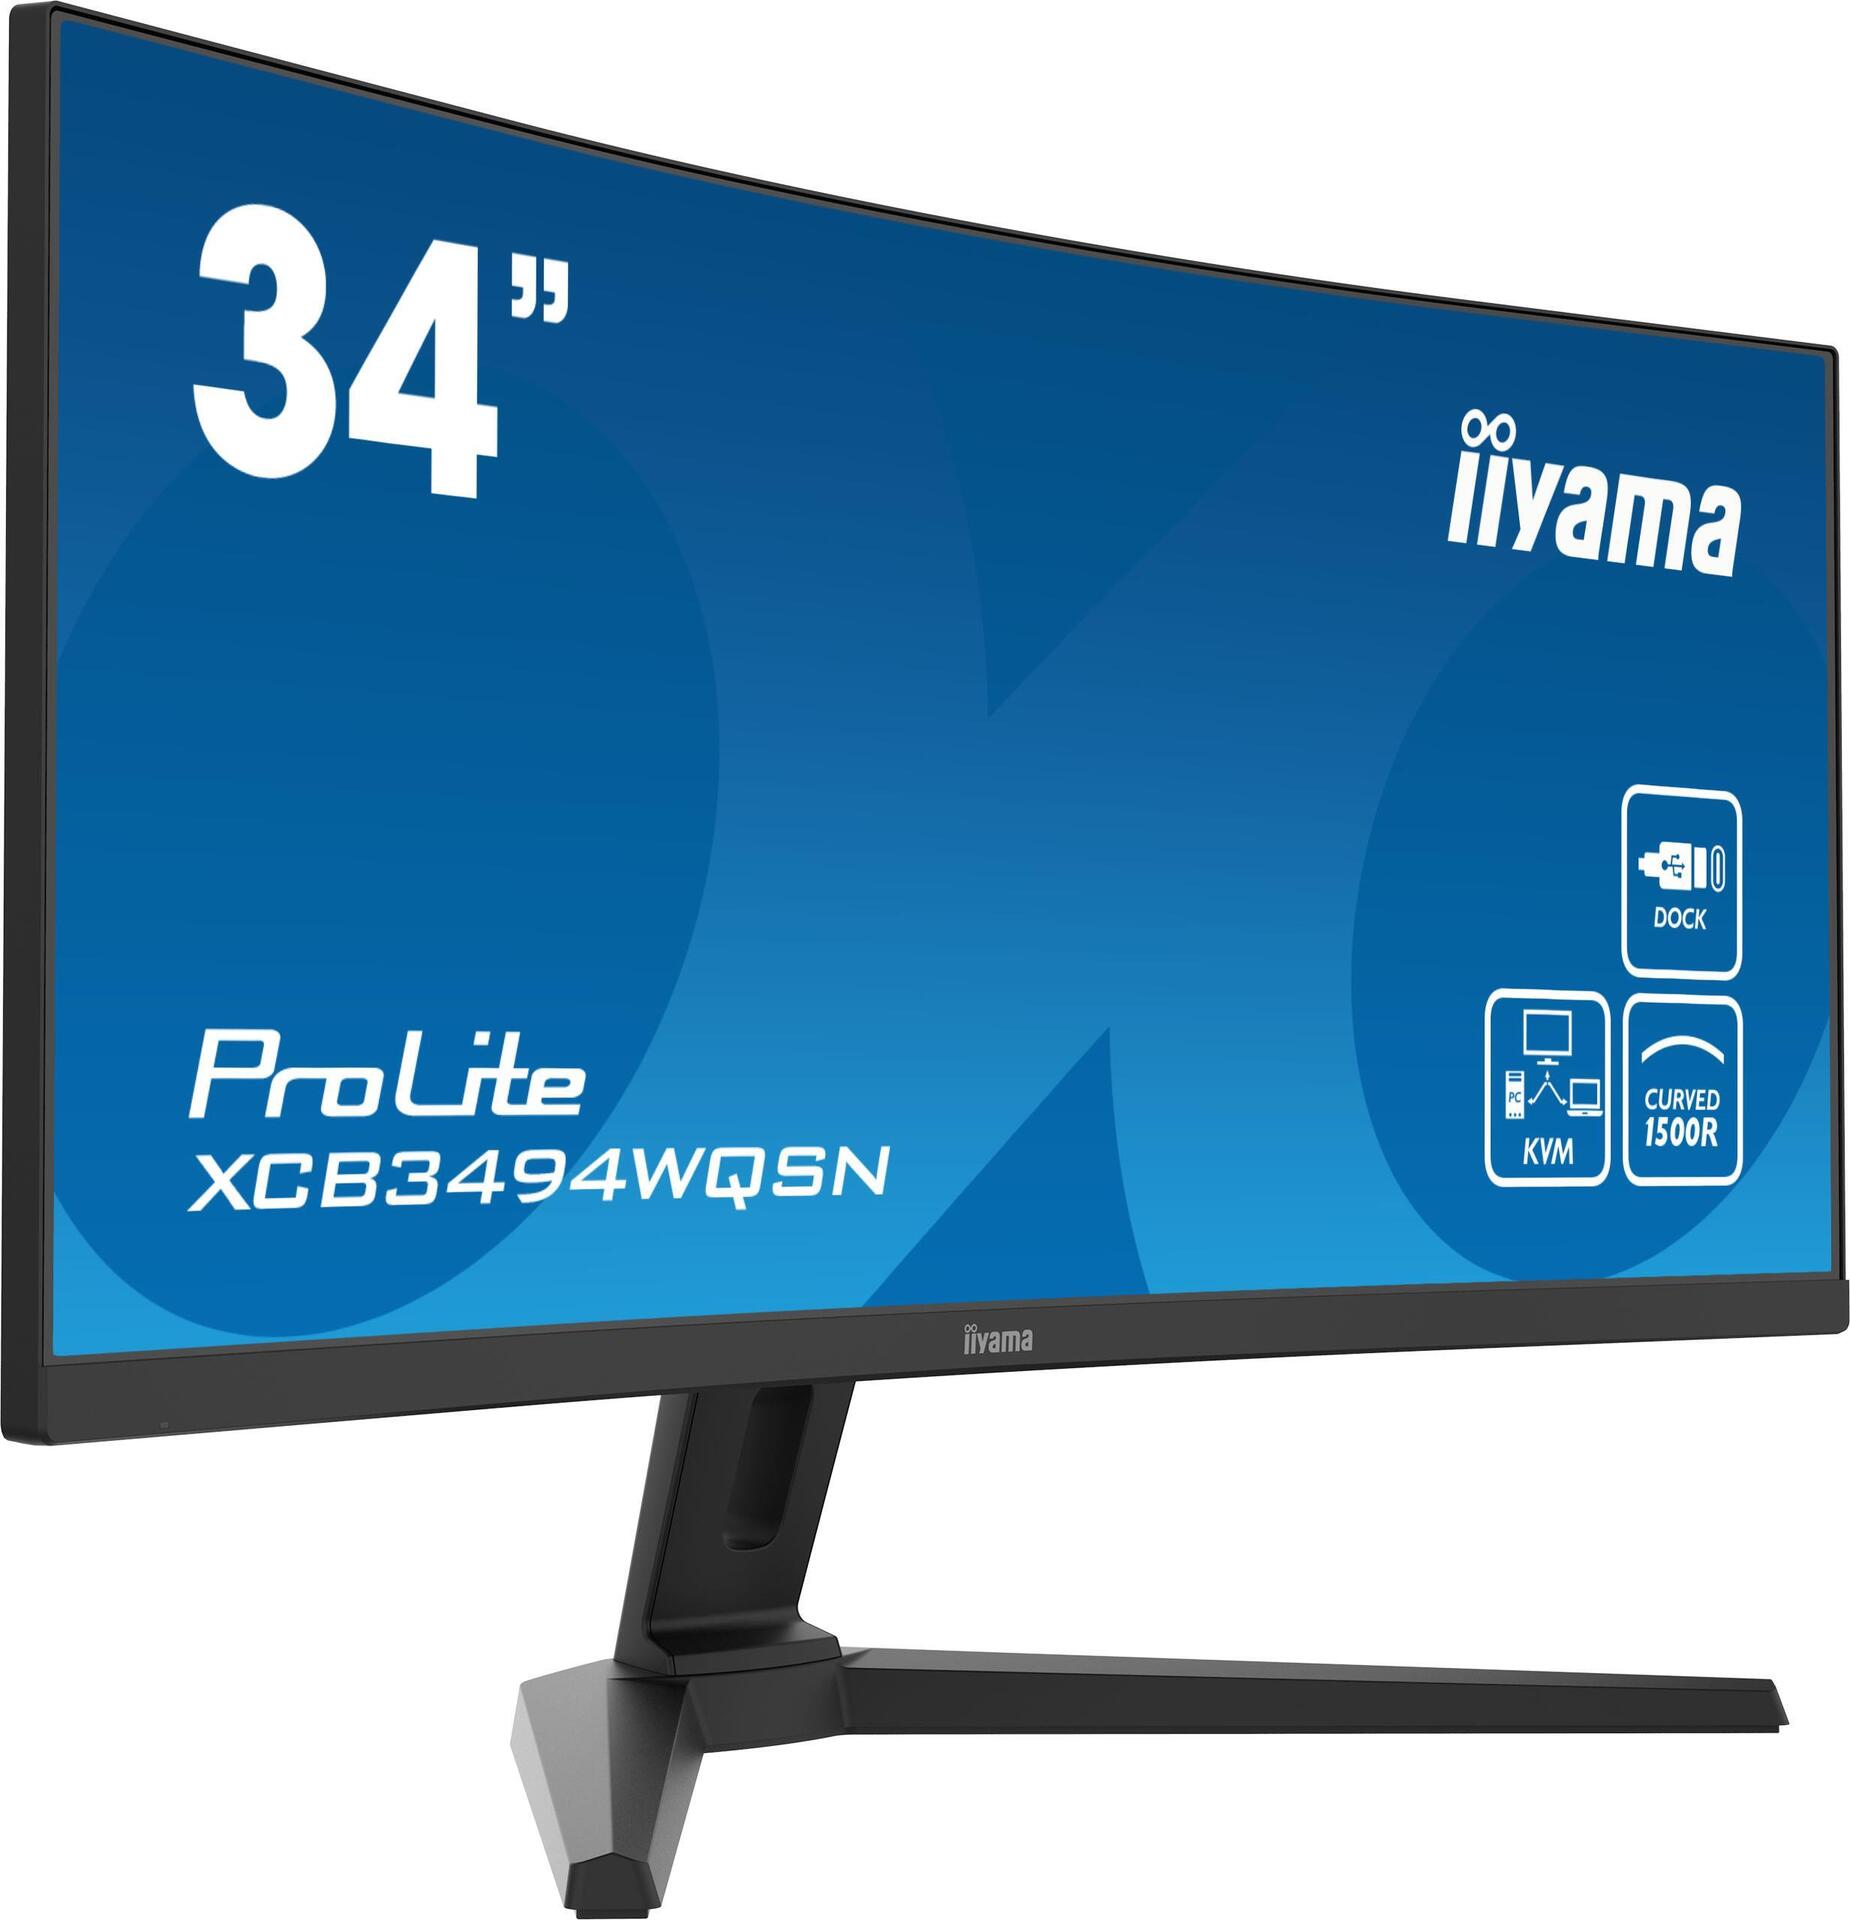 Iiyama Pro Lite Monitor 86,40cm (34) (86,36cm) Curved XCB3494WQSN-B1 schwarz 3440x1440 1x DisplayPort 1.2 / 1xHDMI 1.4 [Energieklasse G] (XCB3494WQSN-B1)